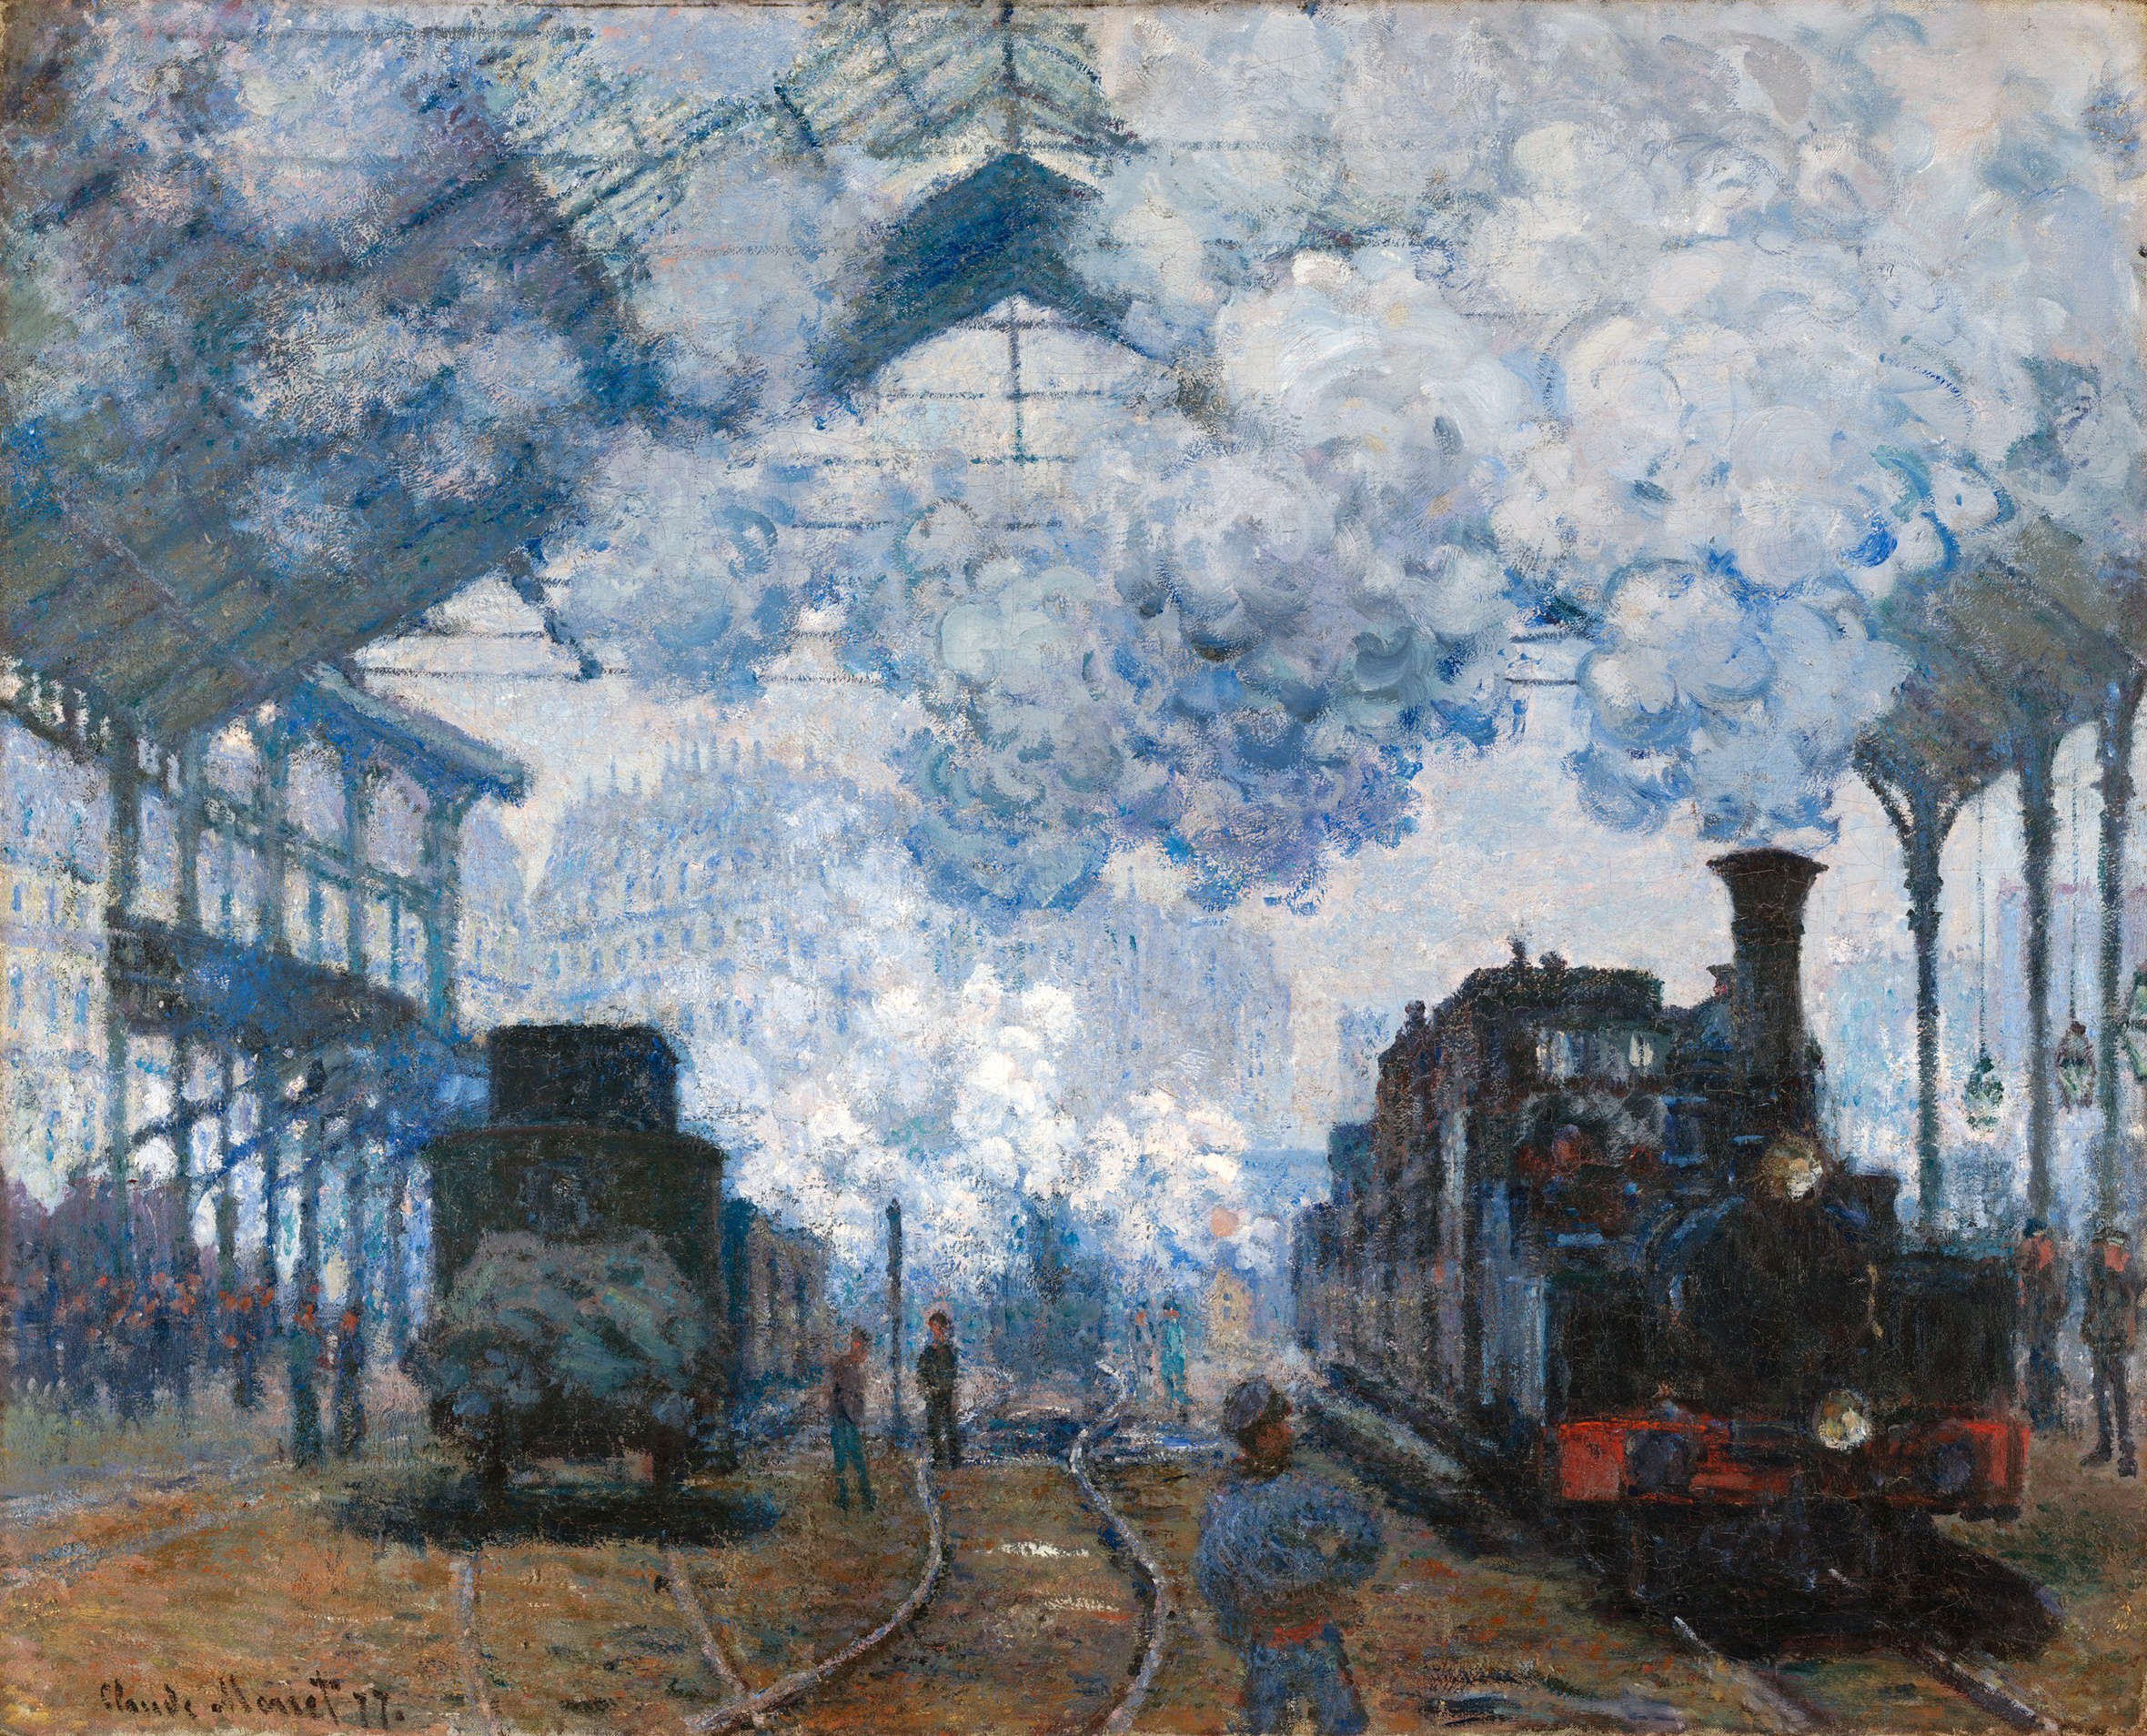 Saint-Lazare Garı, Trenin Gelişi (orig. "The Gare Saint-Lazare, Arrival of a Train") by Claude Monet - 1877 - 80 x 98 cm 